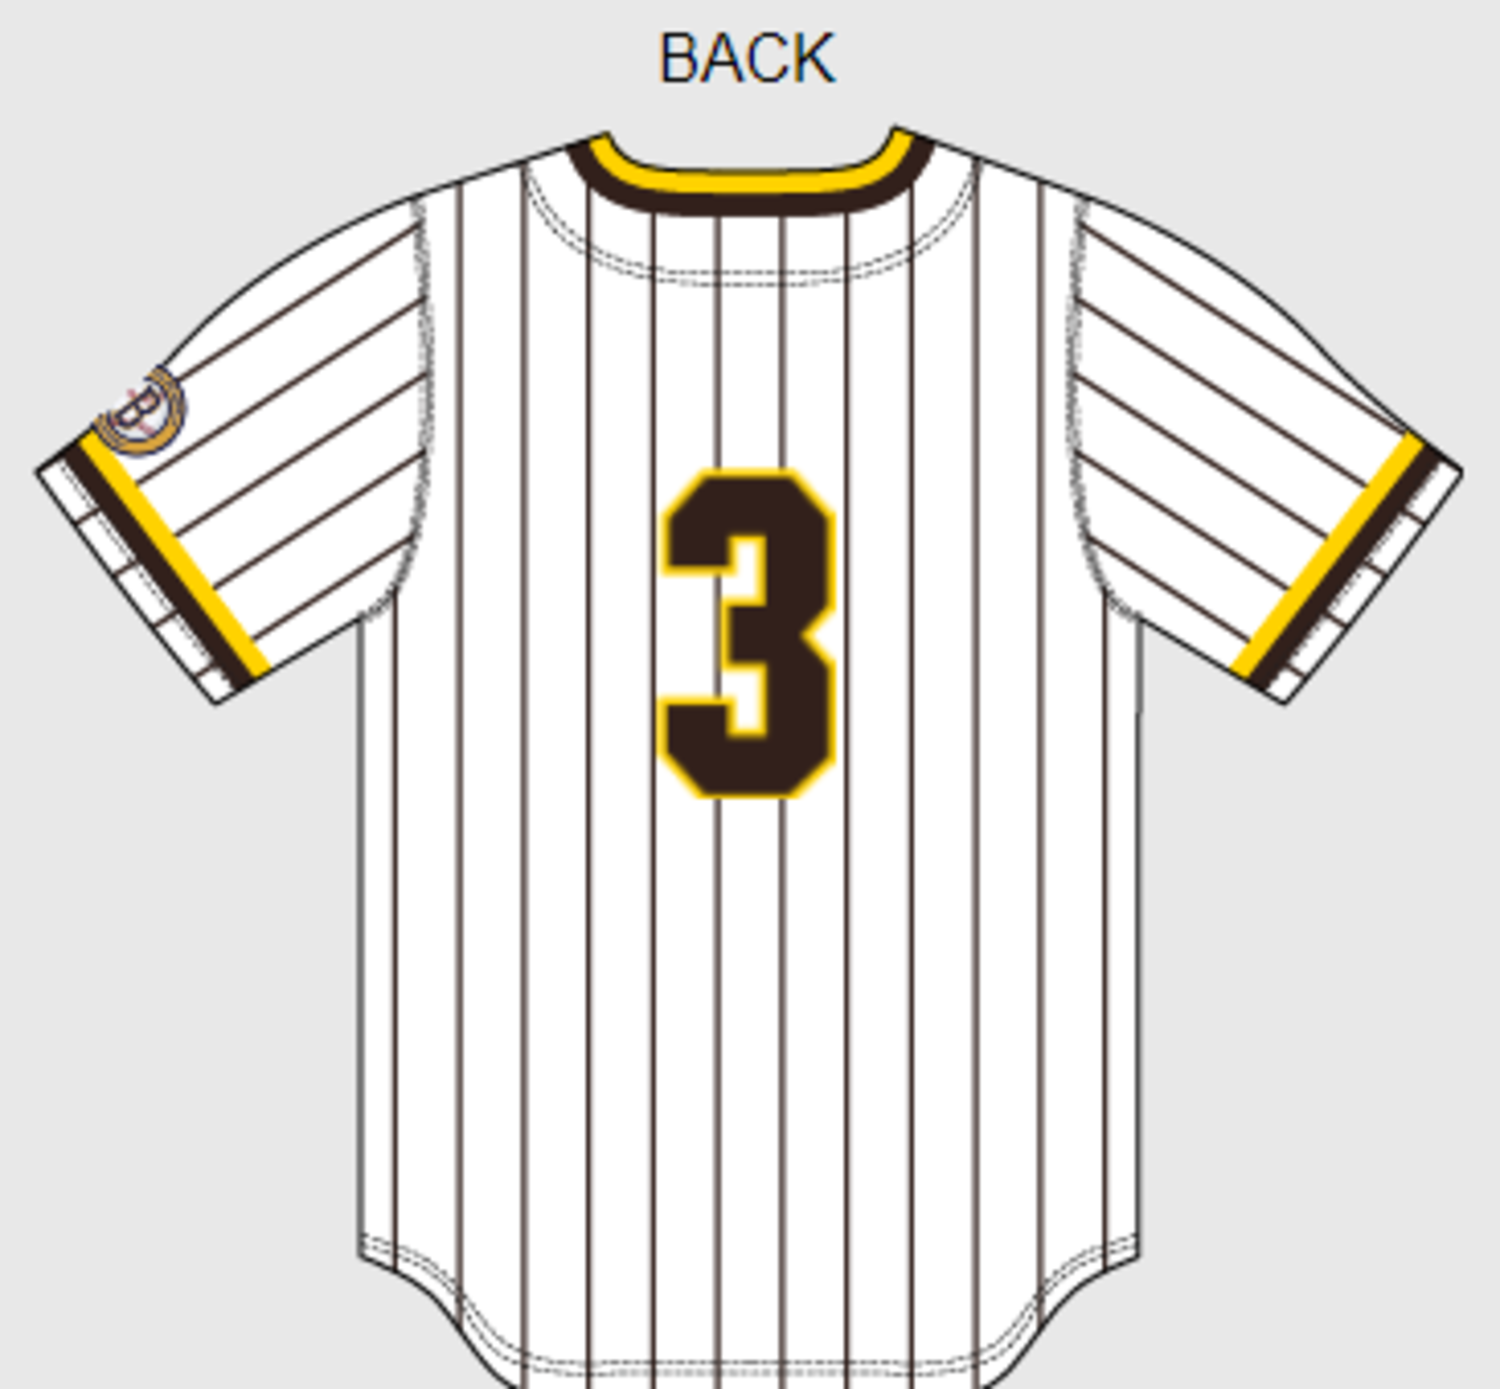 Richardson Cap Braves Baseball Custom Sublimated Pinstripe Jersey